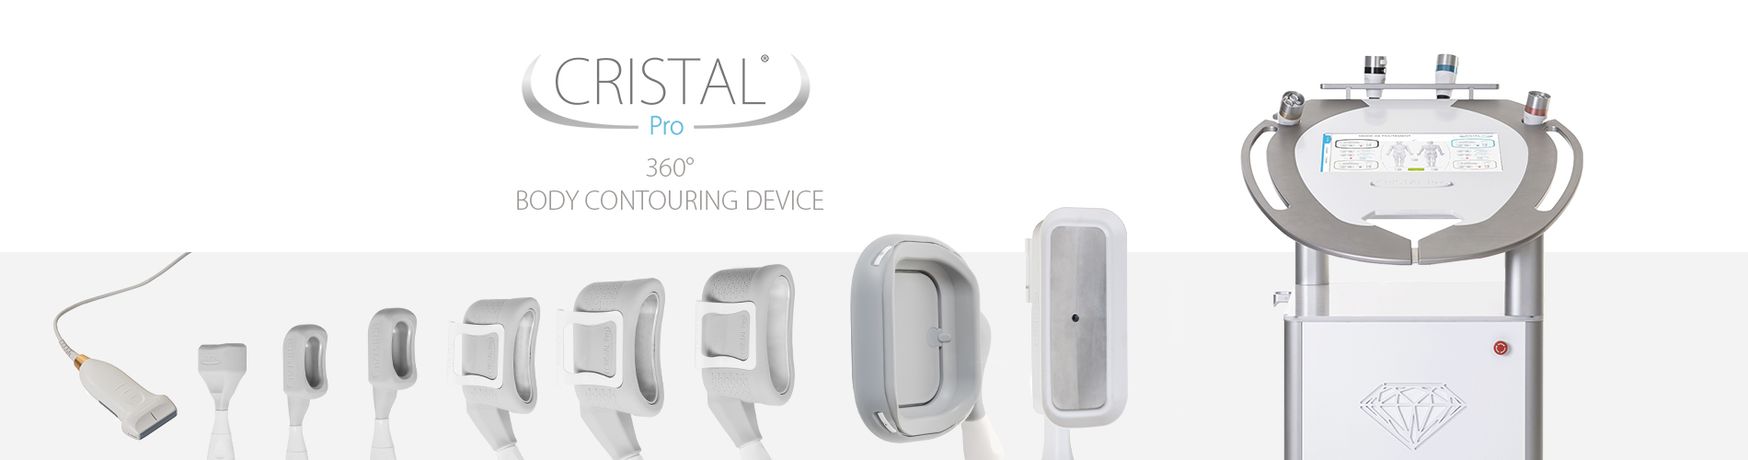 CRISTAL Pro - Medical Cryolipolysis Body-Layering Device